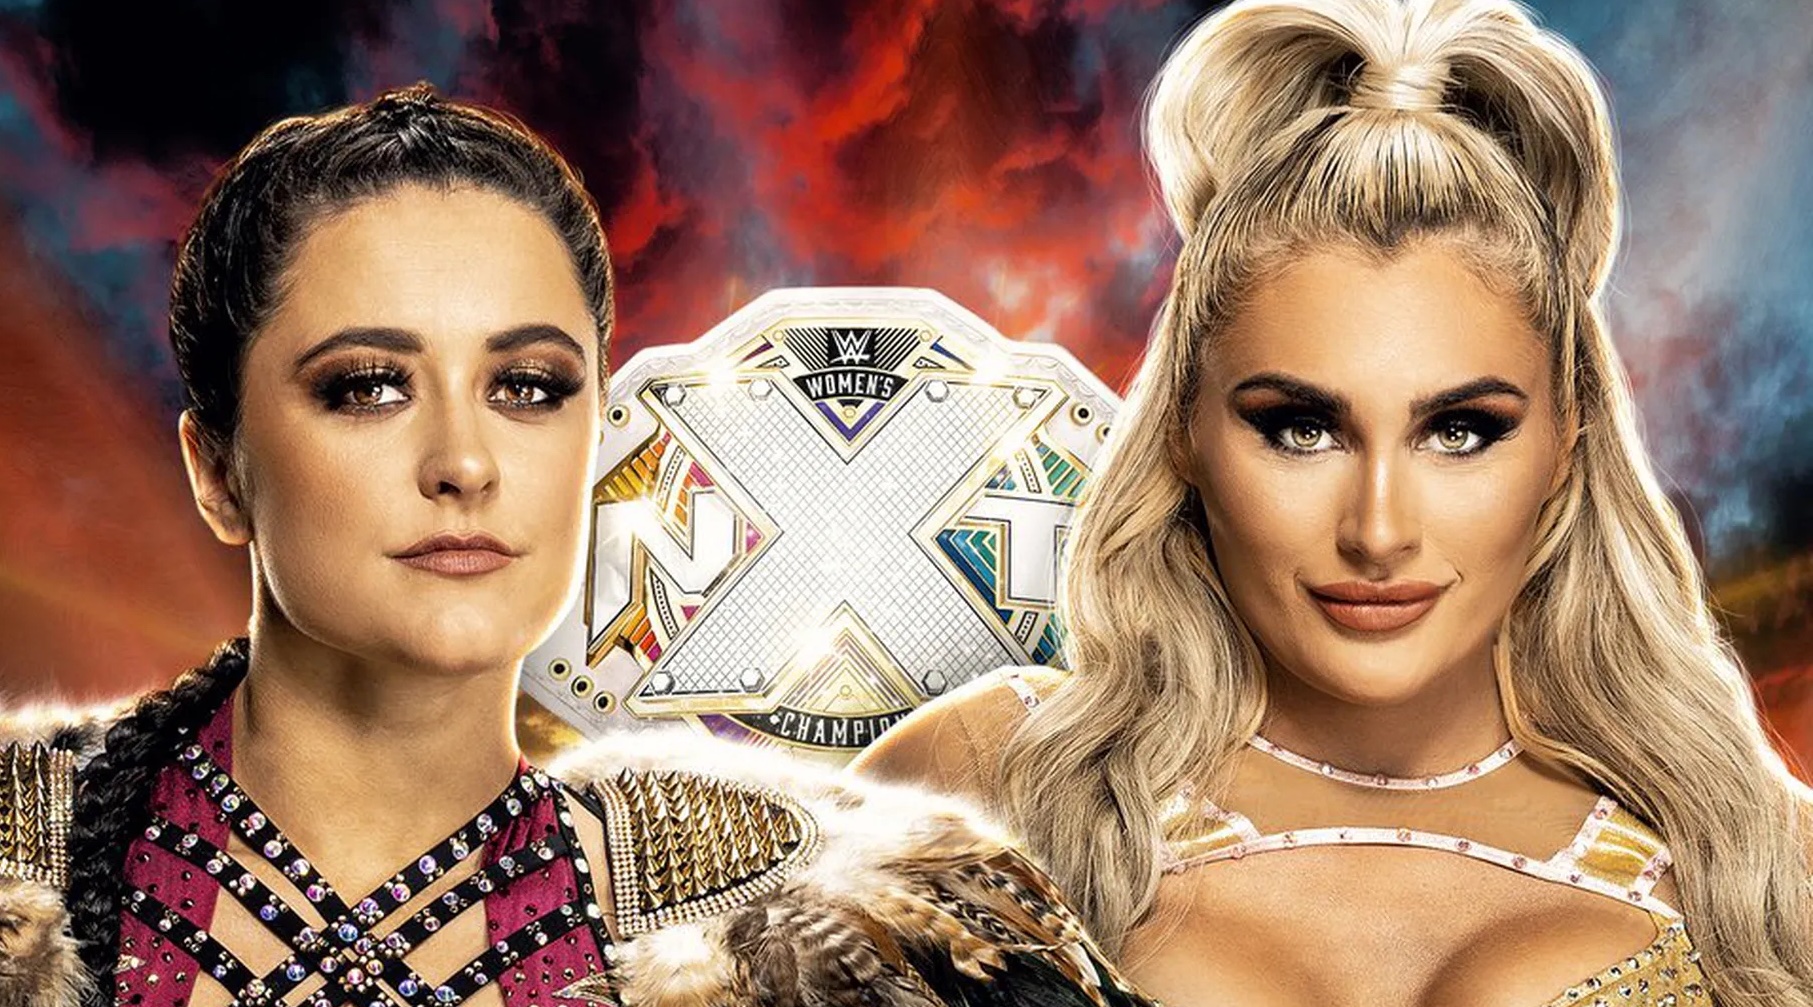 New NXT Women’s Champion crowned after tournament finals at Battleground